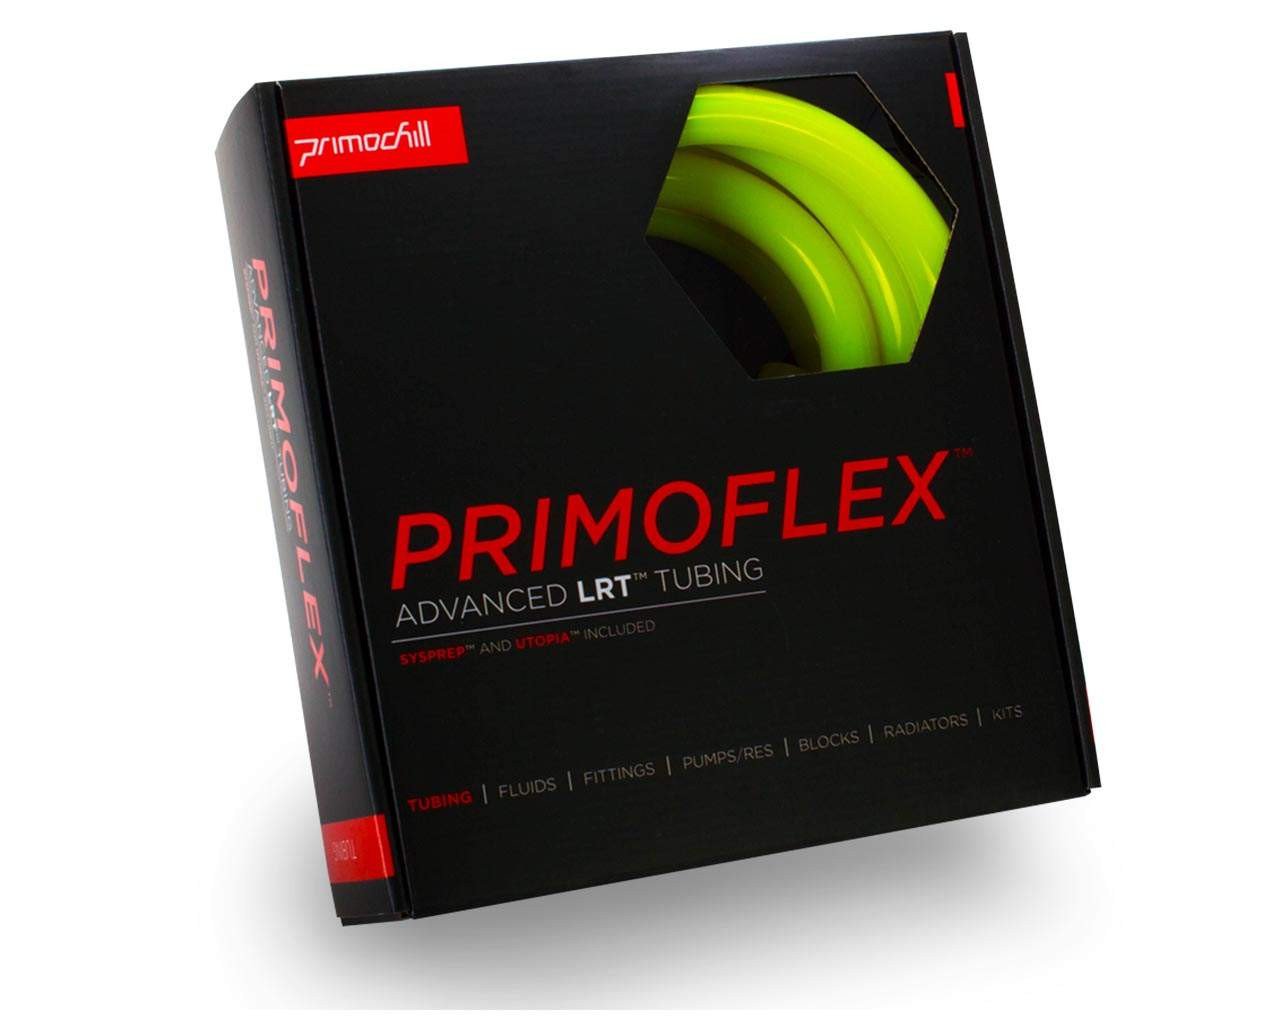 PrimoFlex Advanced LRT Soft Flexible Tubing -3/8in.ID x 5/8in.OD, 10 feet - PrimoChill - KEEPING IT COOL Pearl UV Yellow